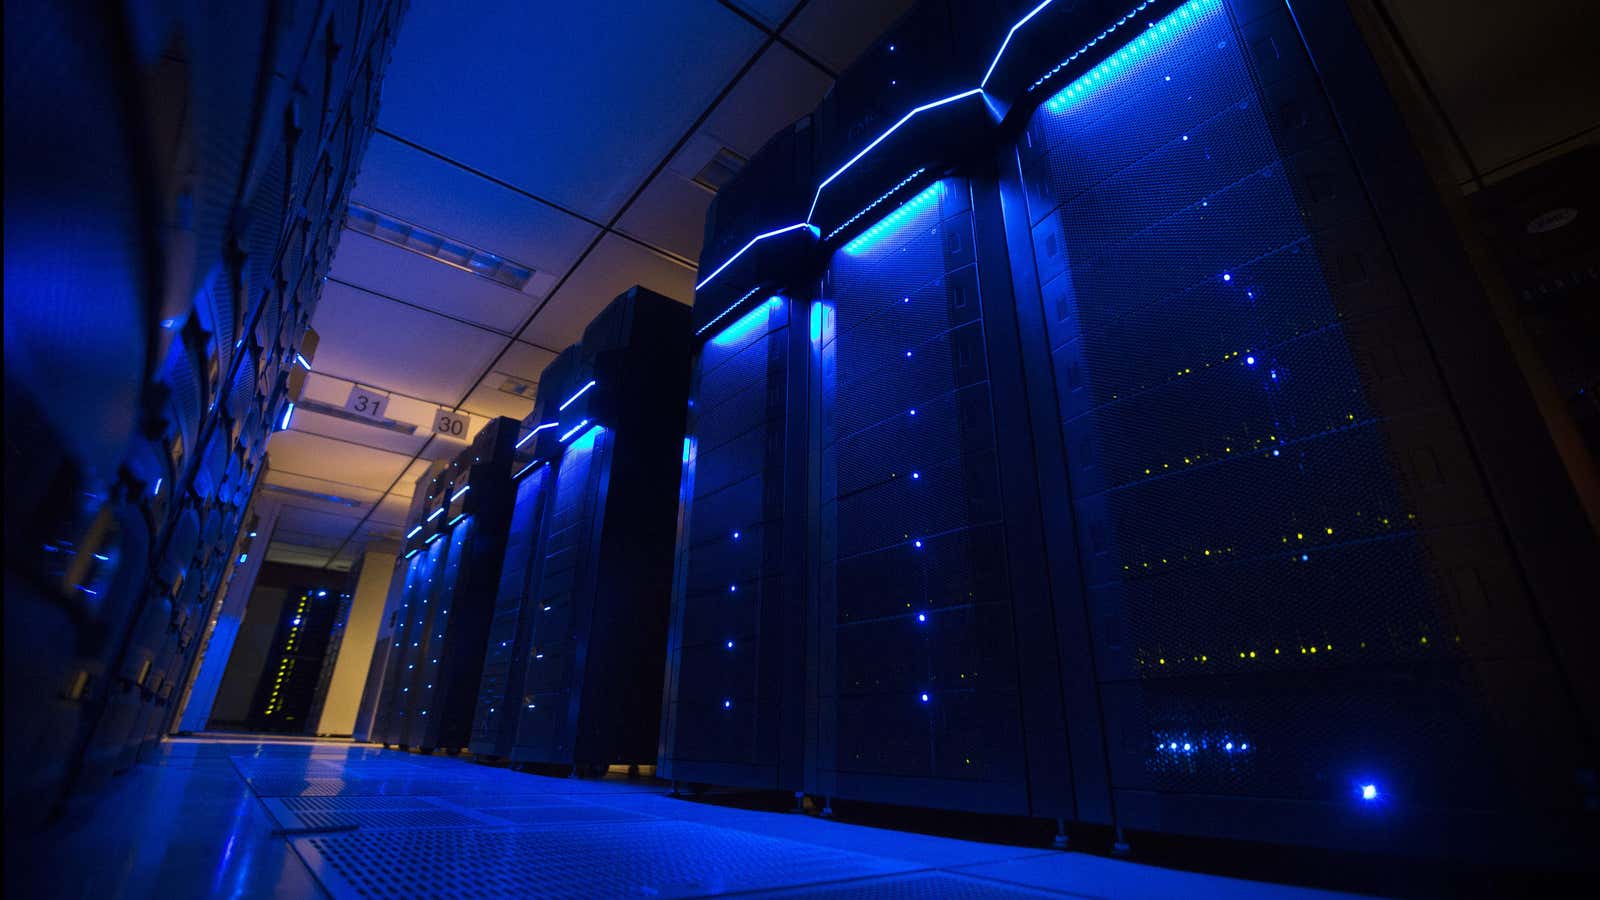 Server banks inside a data center at AEP headquarters in Columbus, Ohio.